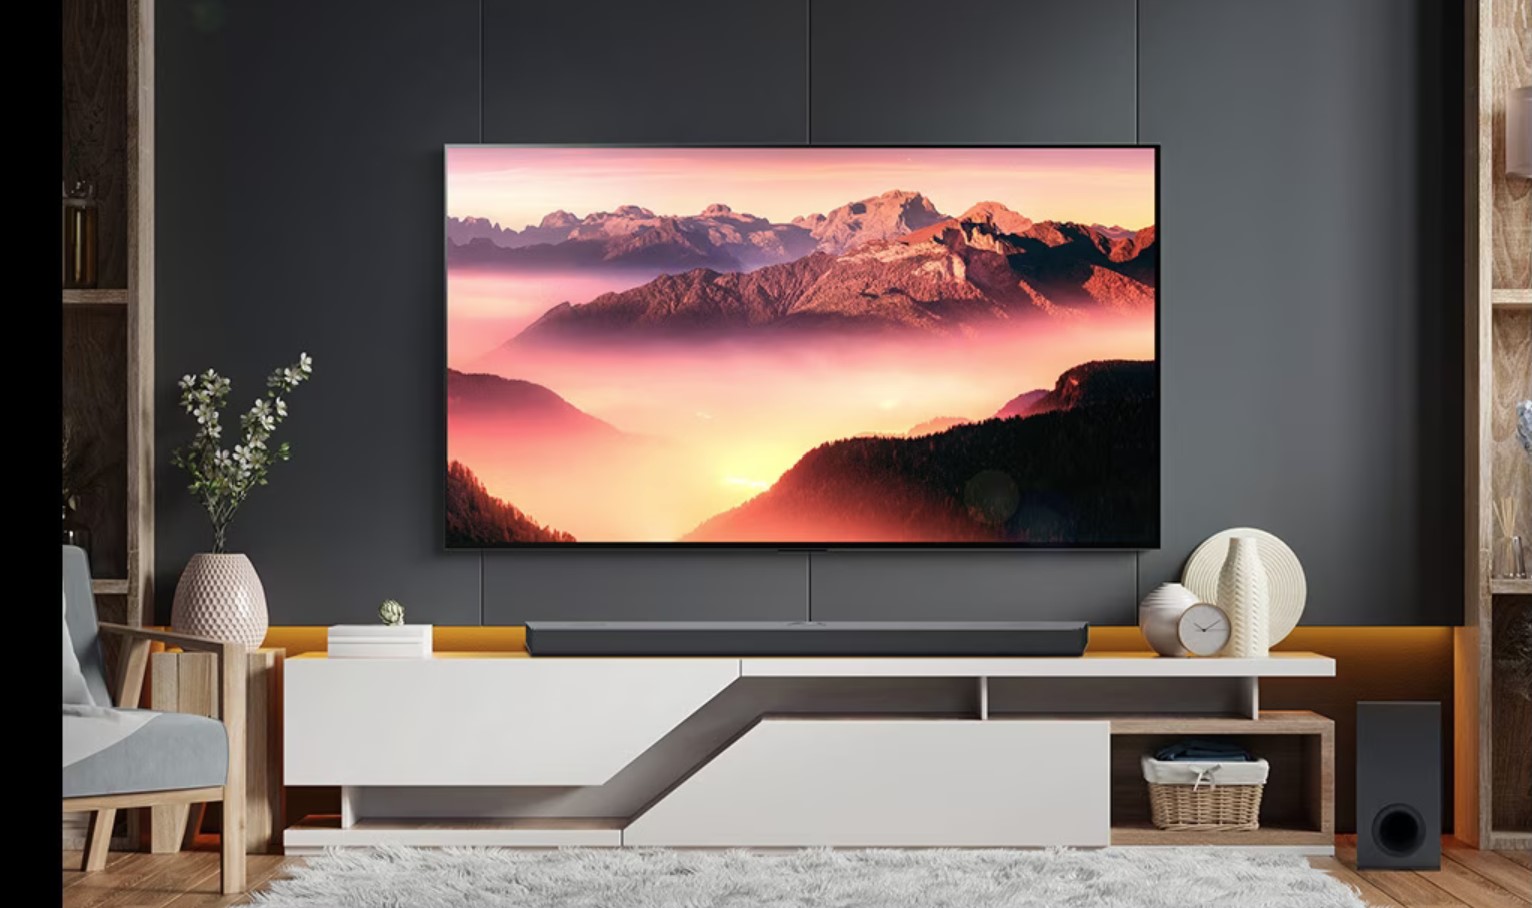 LG G3 OLED MLA: FULL REVIEW IN 6 MINUTES / Smart TV 4K webOS